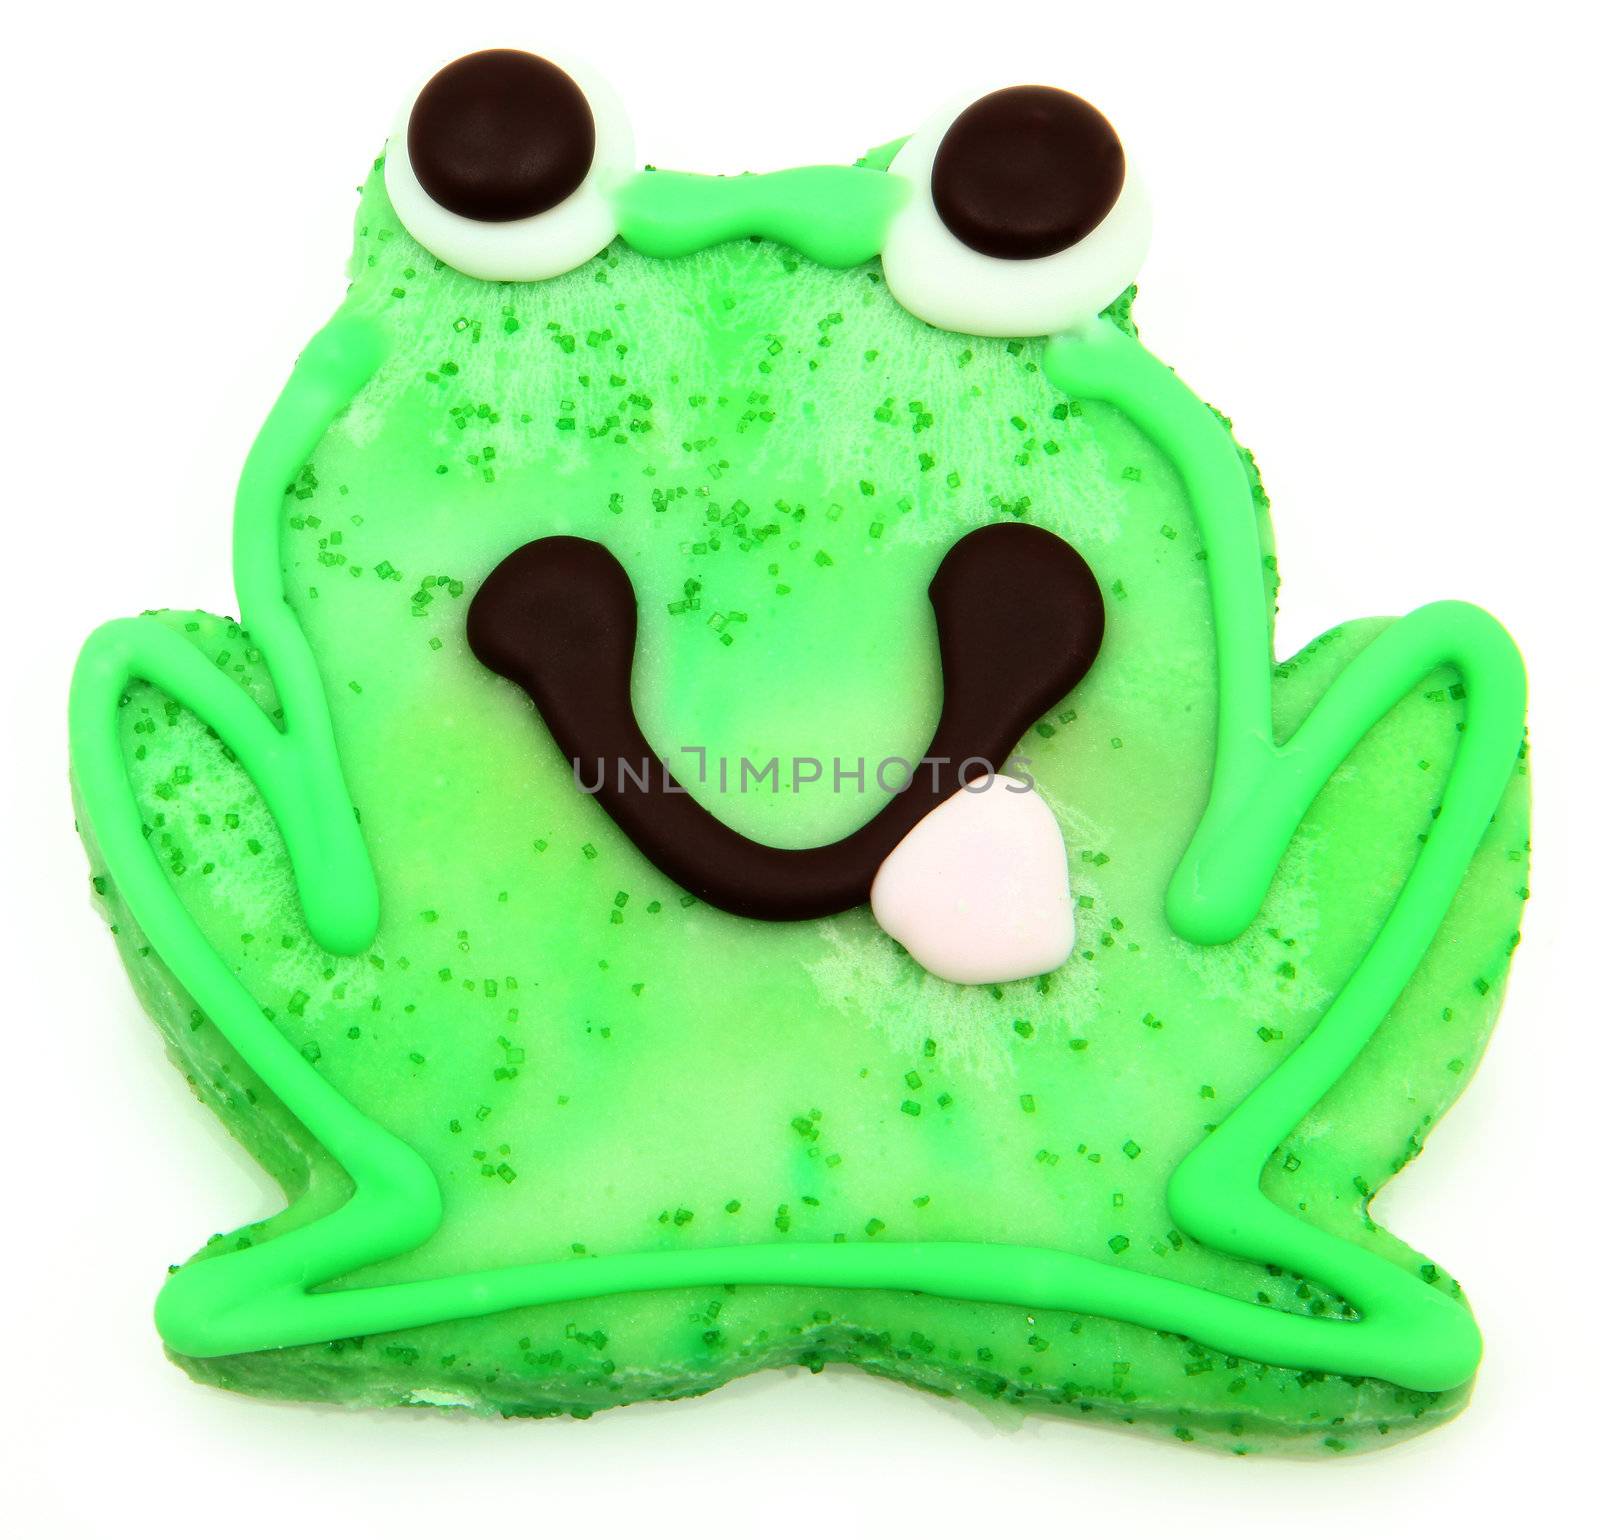 Green frog sugar cookie dessert over white background.